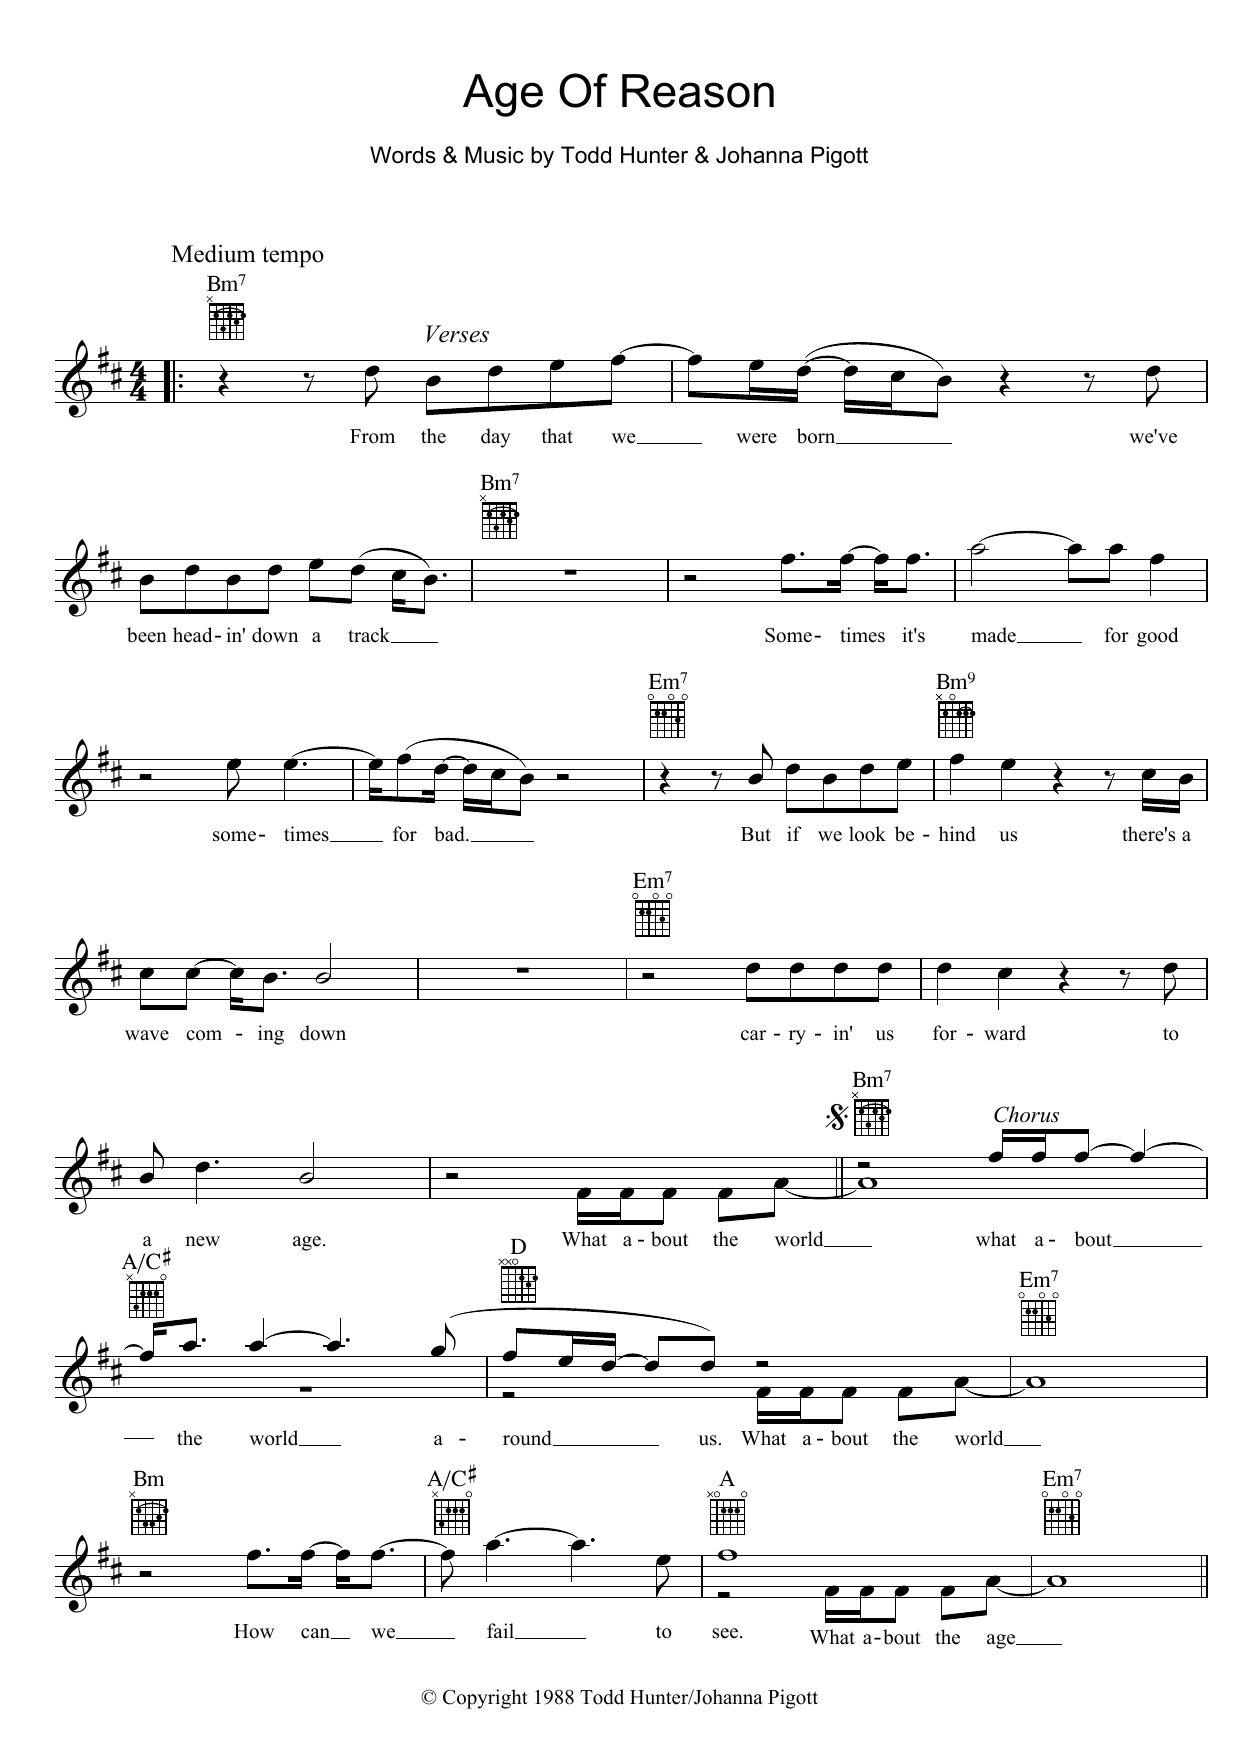 John Farnham Age Of Reason Sheet Music Notes & Chords for Melody Line, Lyrics & Chords - Download or Print PDF